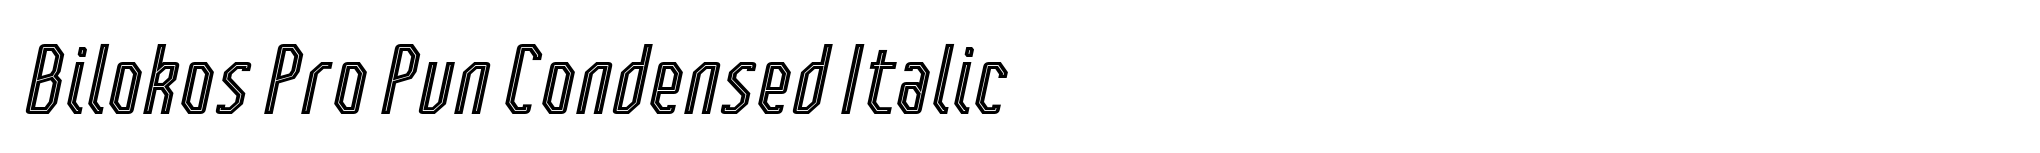 Bilokos Pro Pun Condensed Italic image